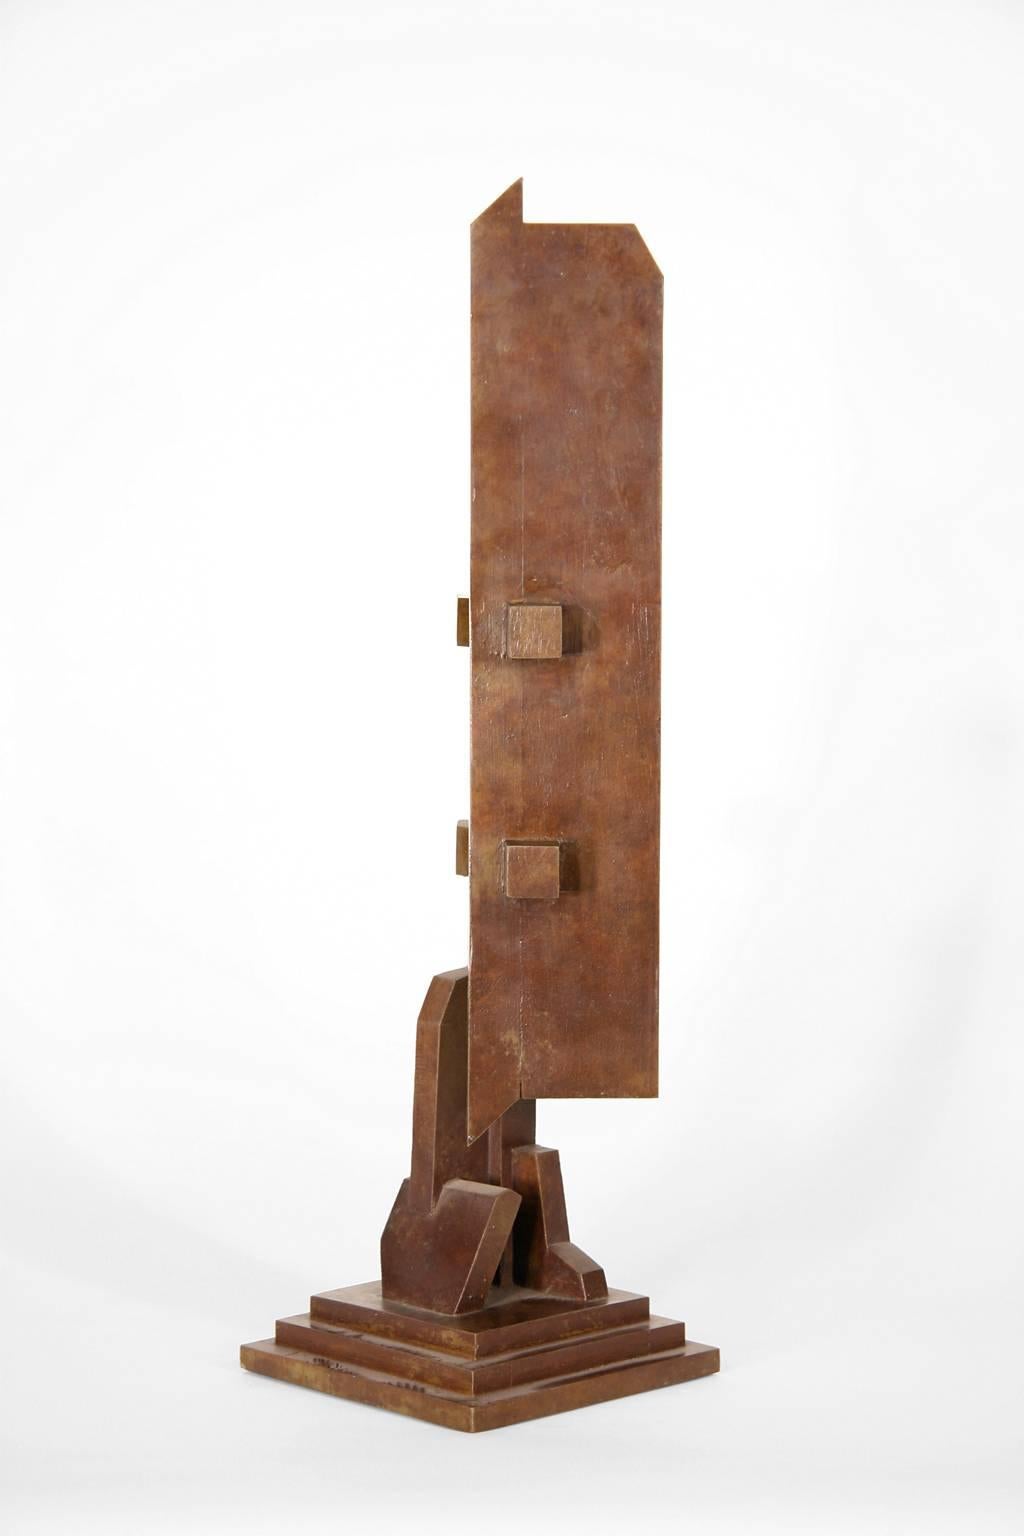 "1099", Richard Heinrich, Abstract Contemporary Bronze Sculpture, Metal